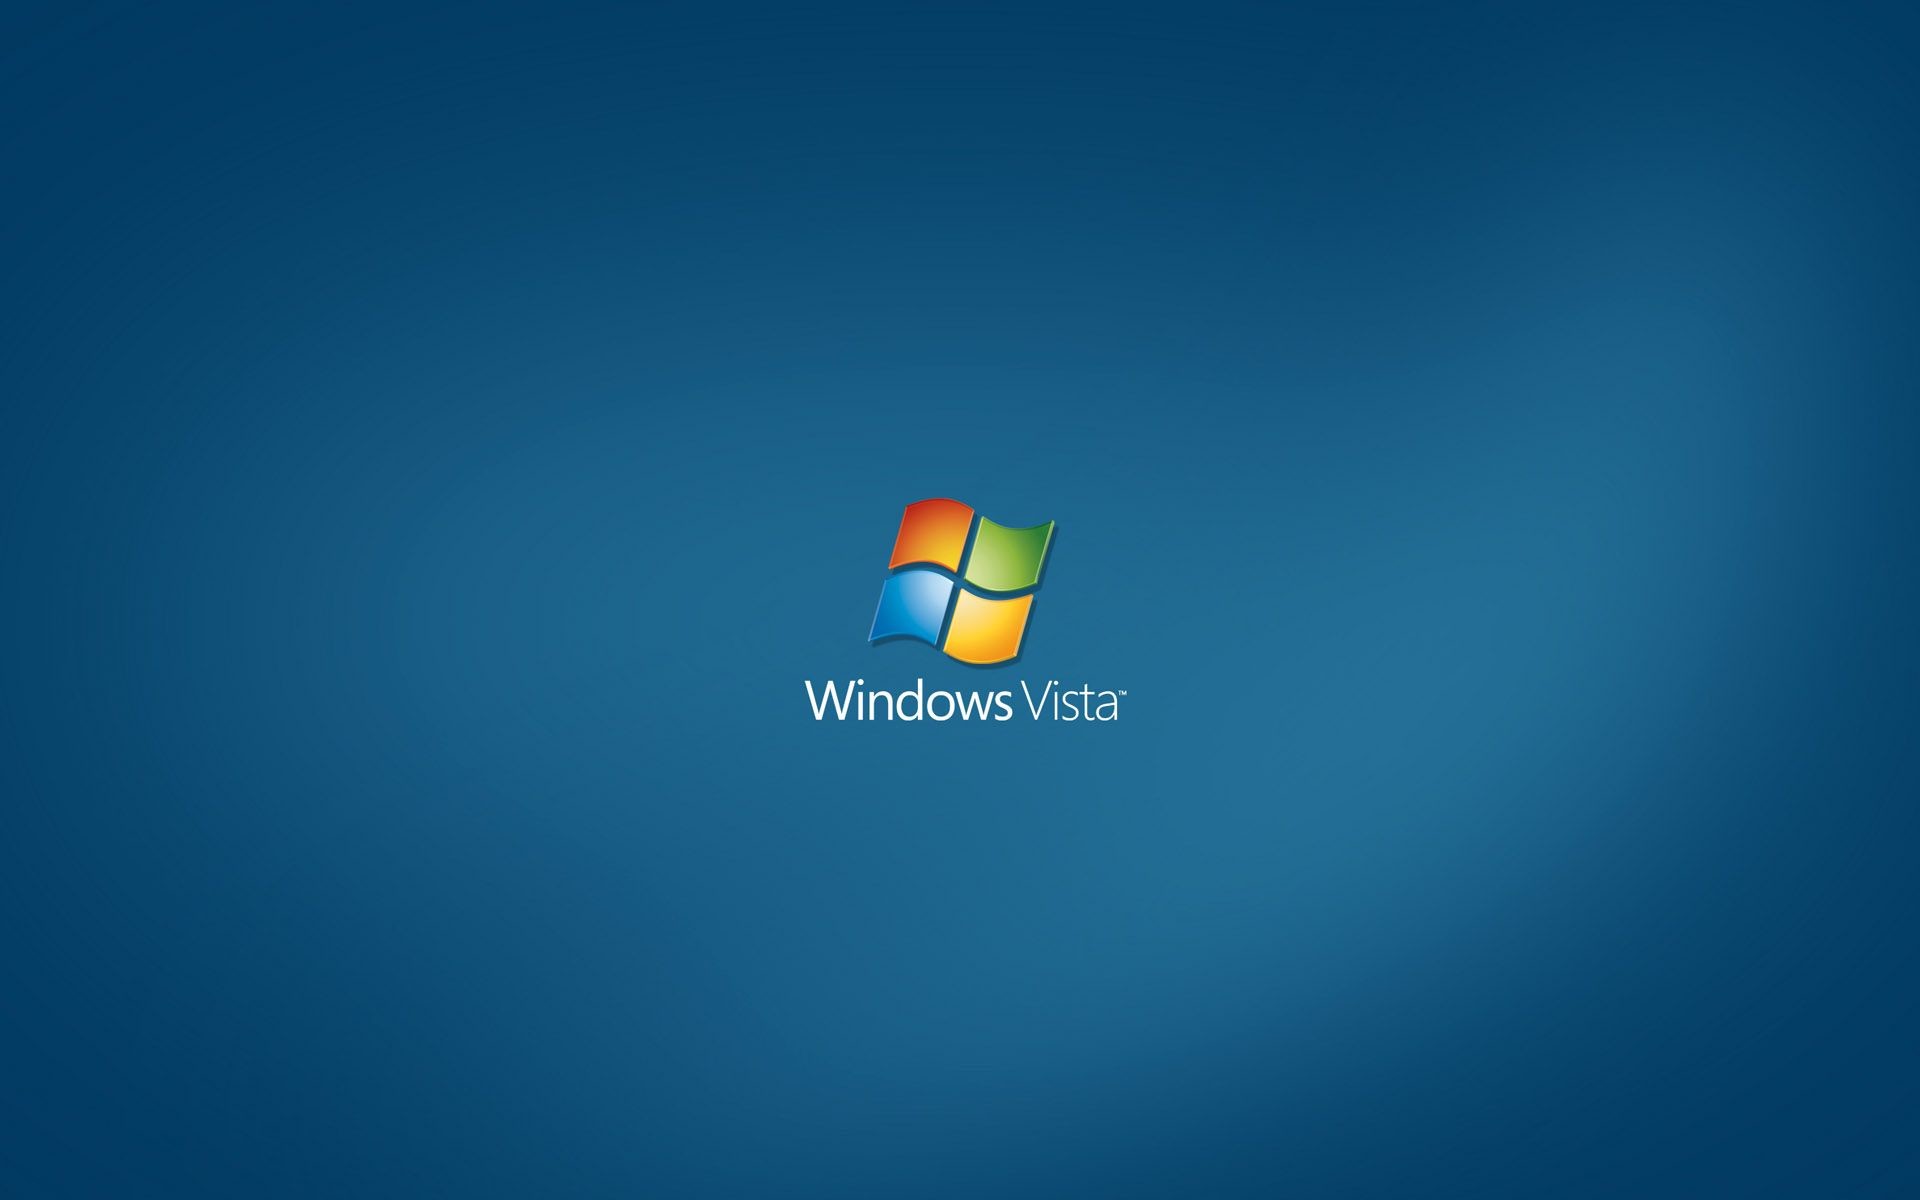 Windows Vista 壁紙 19x1080 ただのhd壁紙